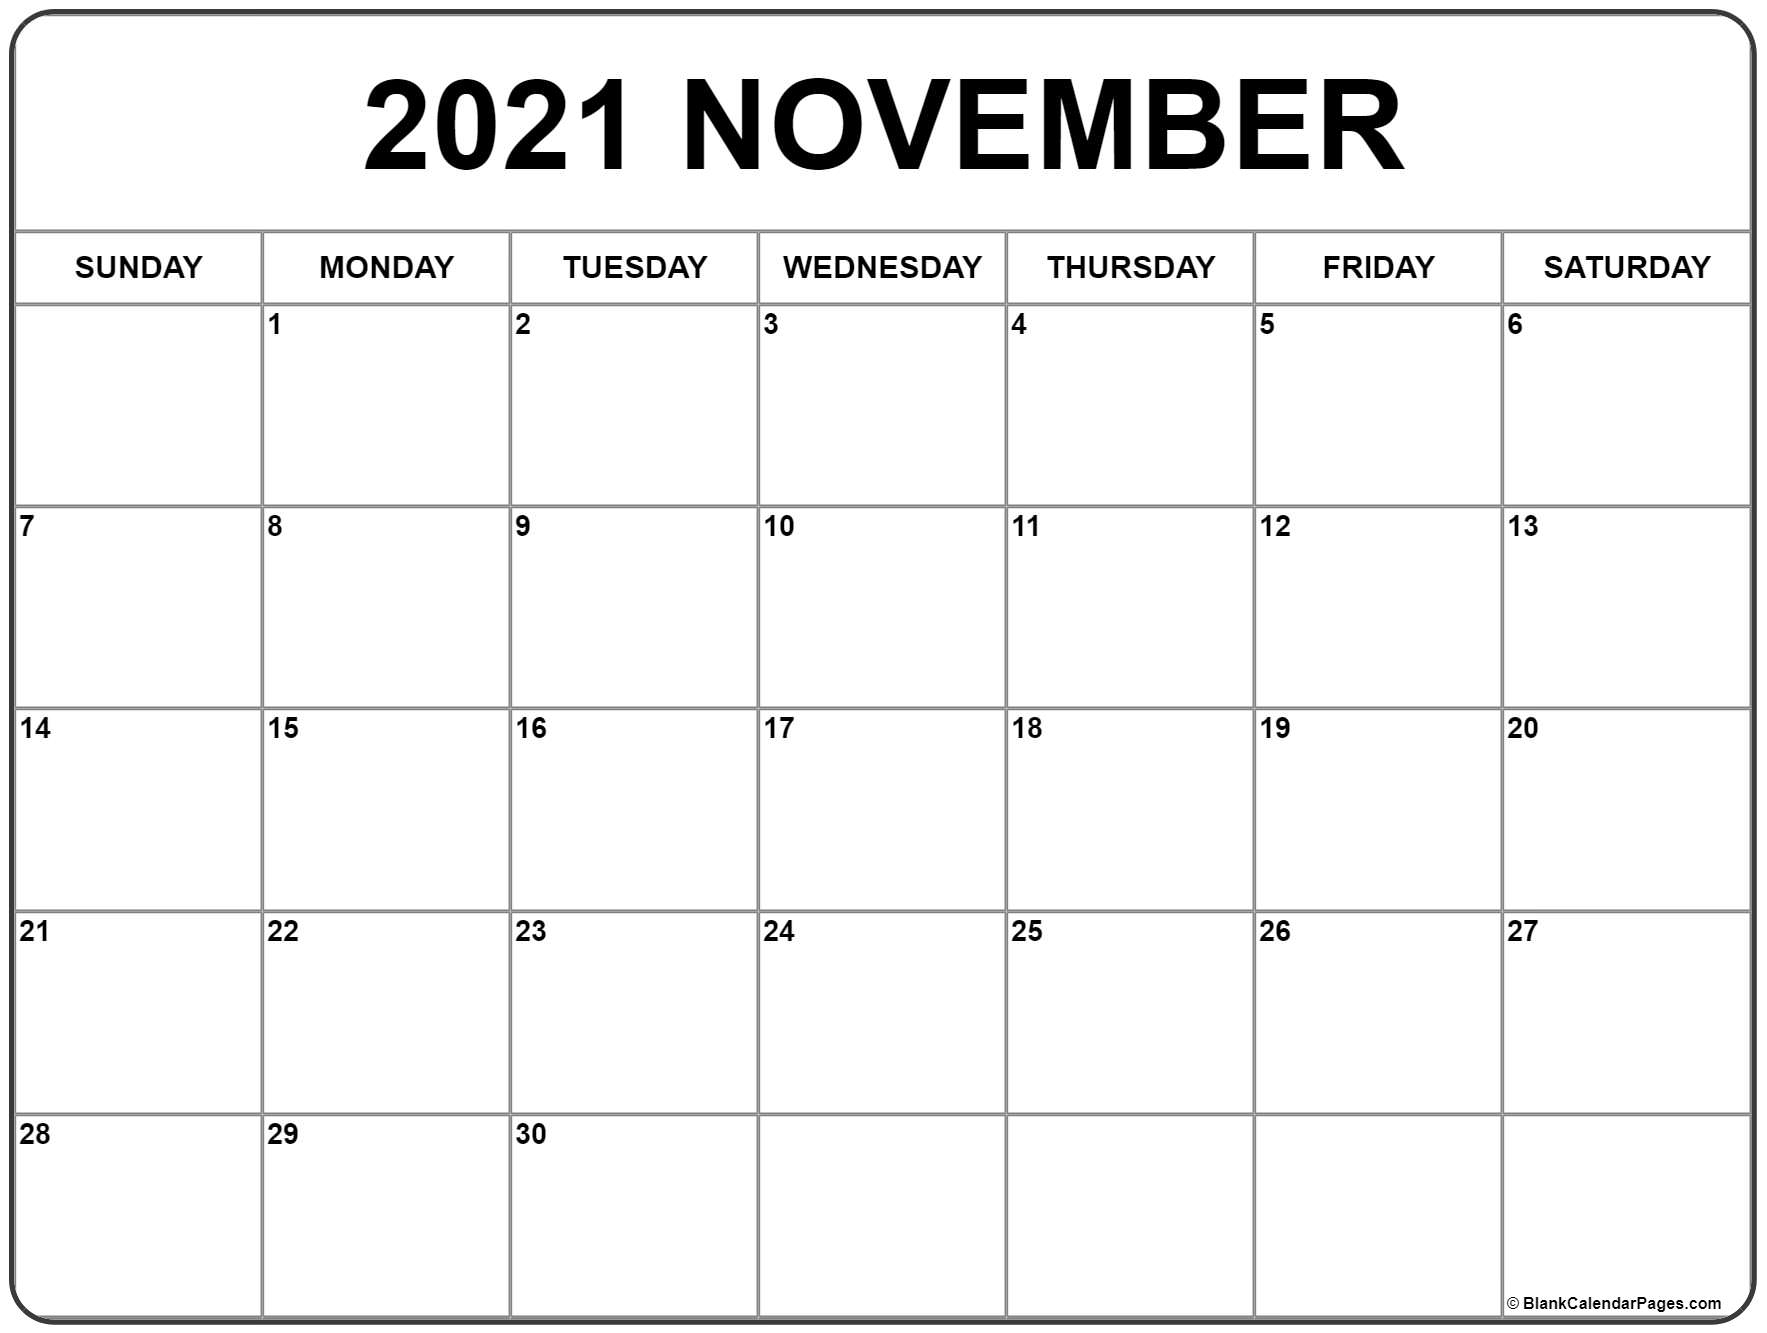 November 2021 Calendar | Free Printable Monthly Calendars